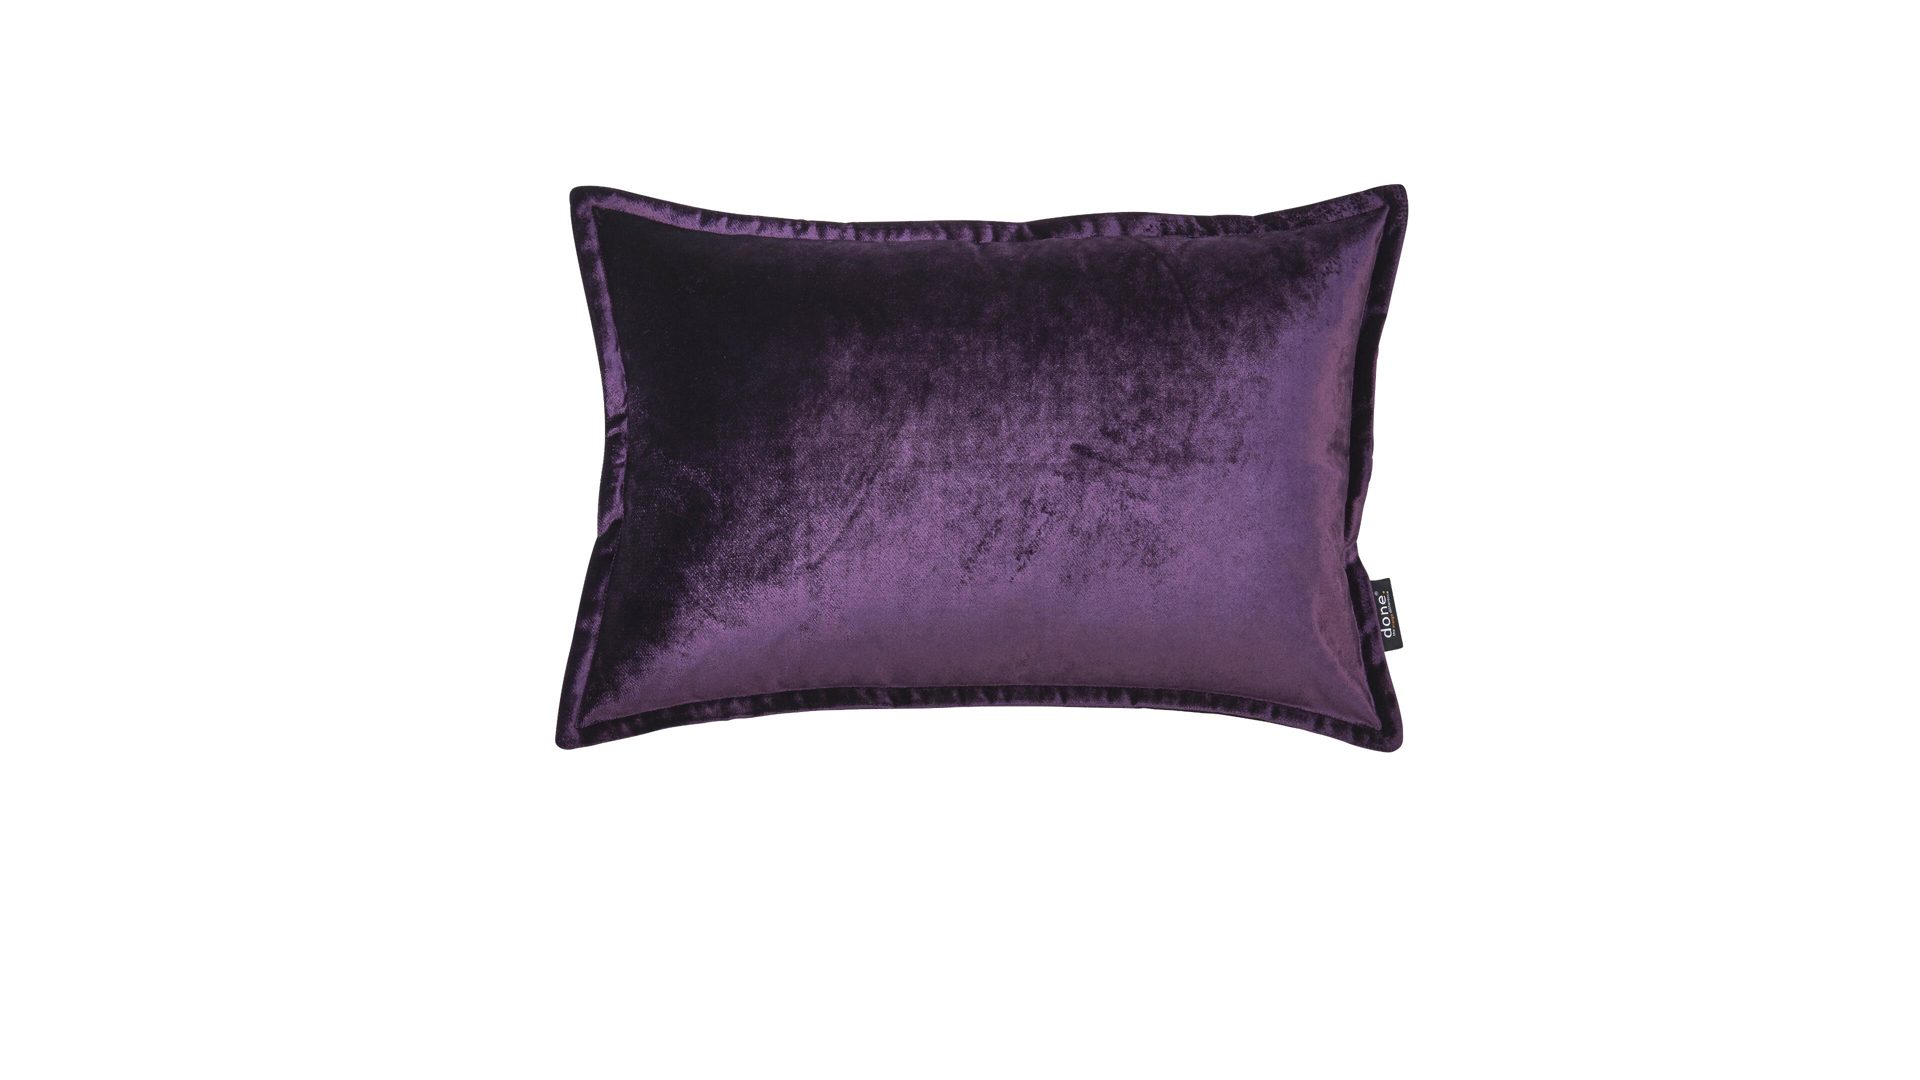 Kissenbezug /-hülle Done by karabel home company aus Stoff in Lila Done Kissenhülle Cushion Glam lilafarbener Samt – ca. 40 x 60 cm